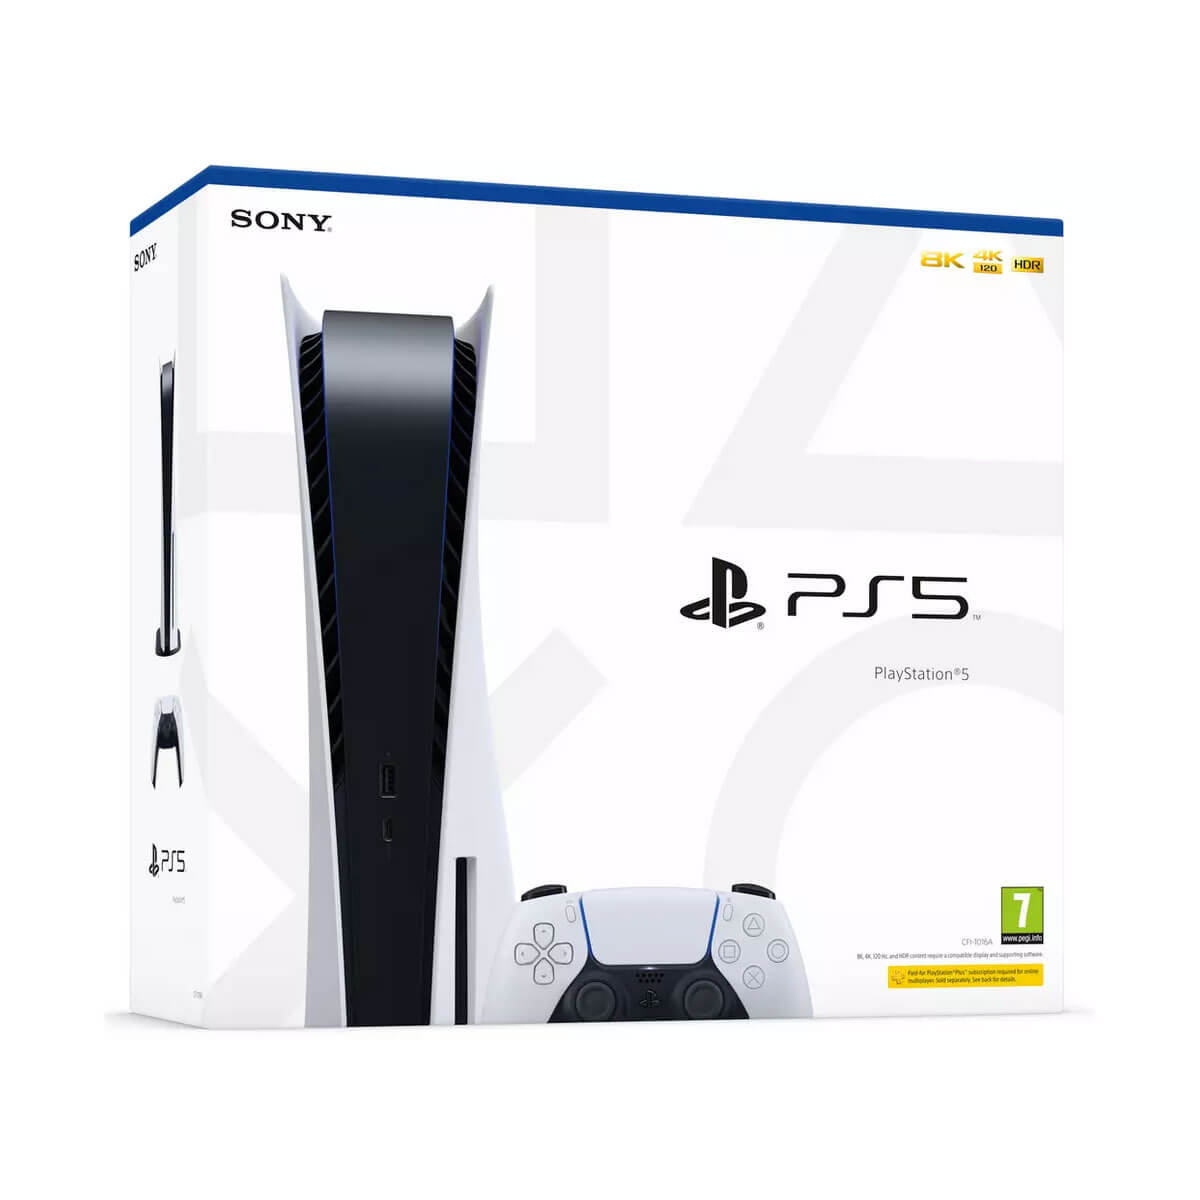 کنسول PlayStation 5 درایو دار با چهار دسته اضافه